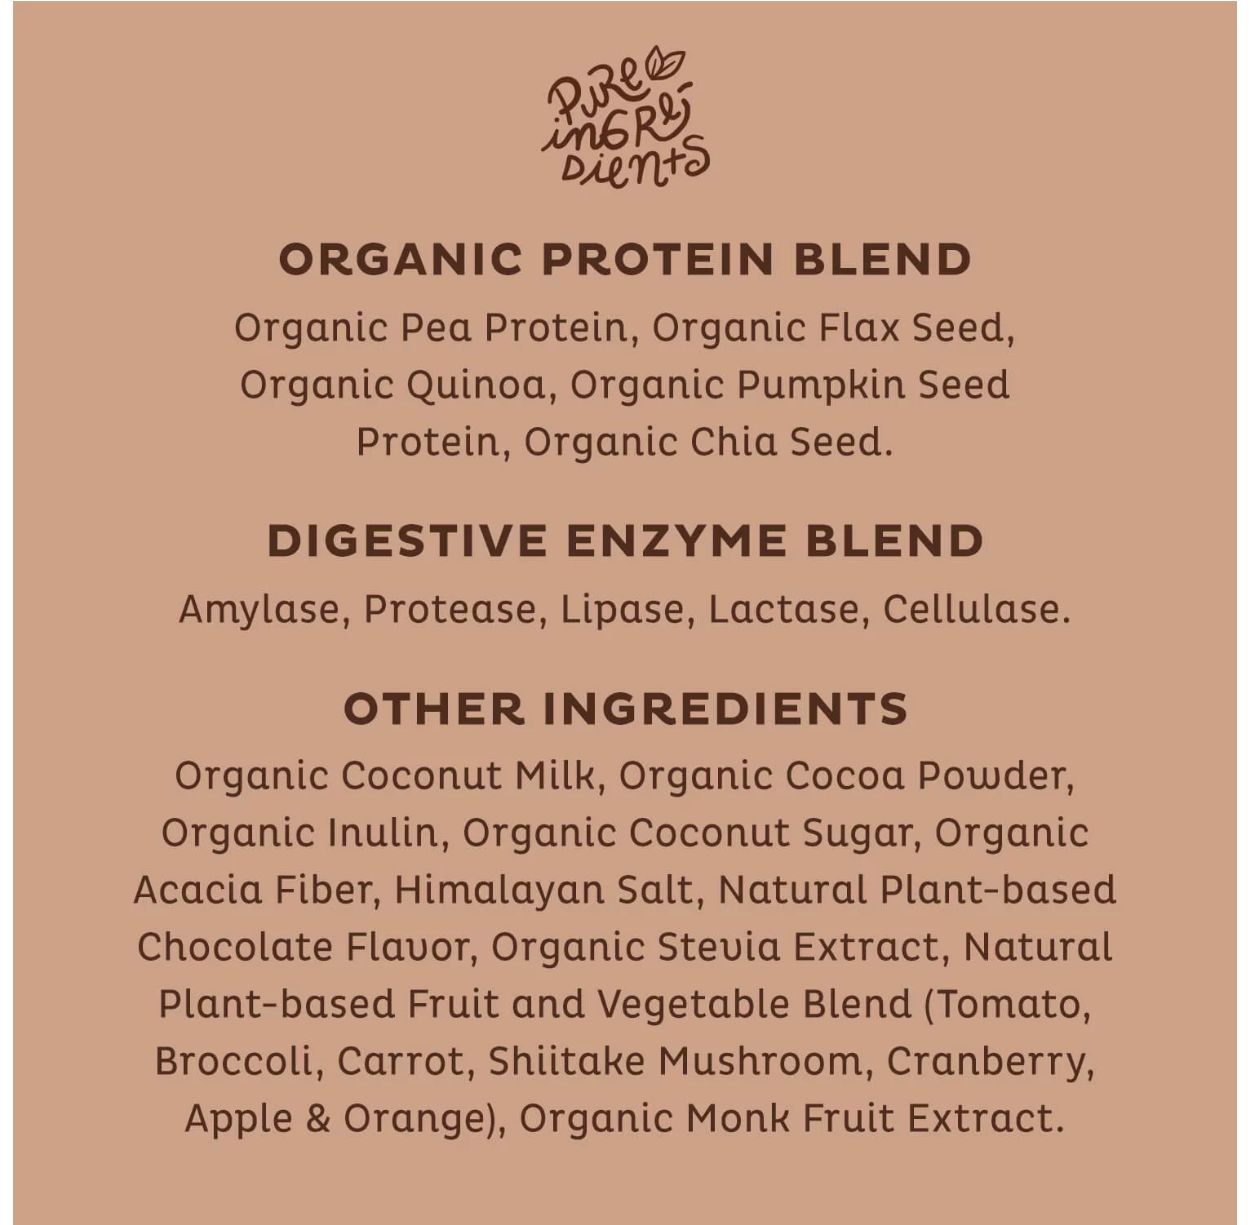 KOS Organic Plant Protein Powder Ingredients 